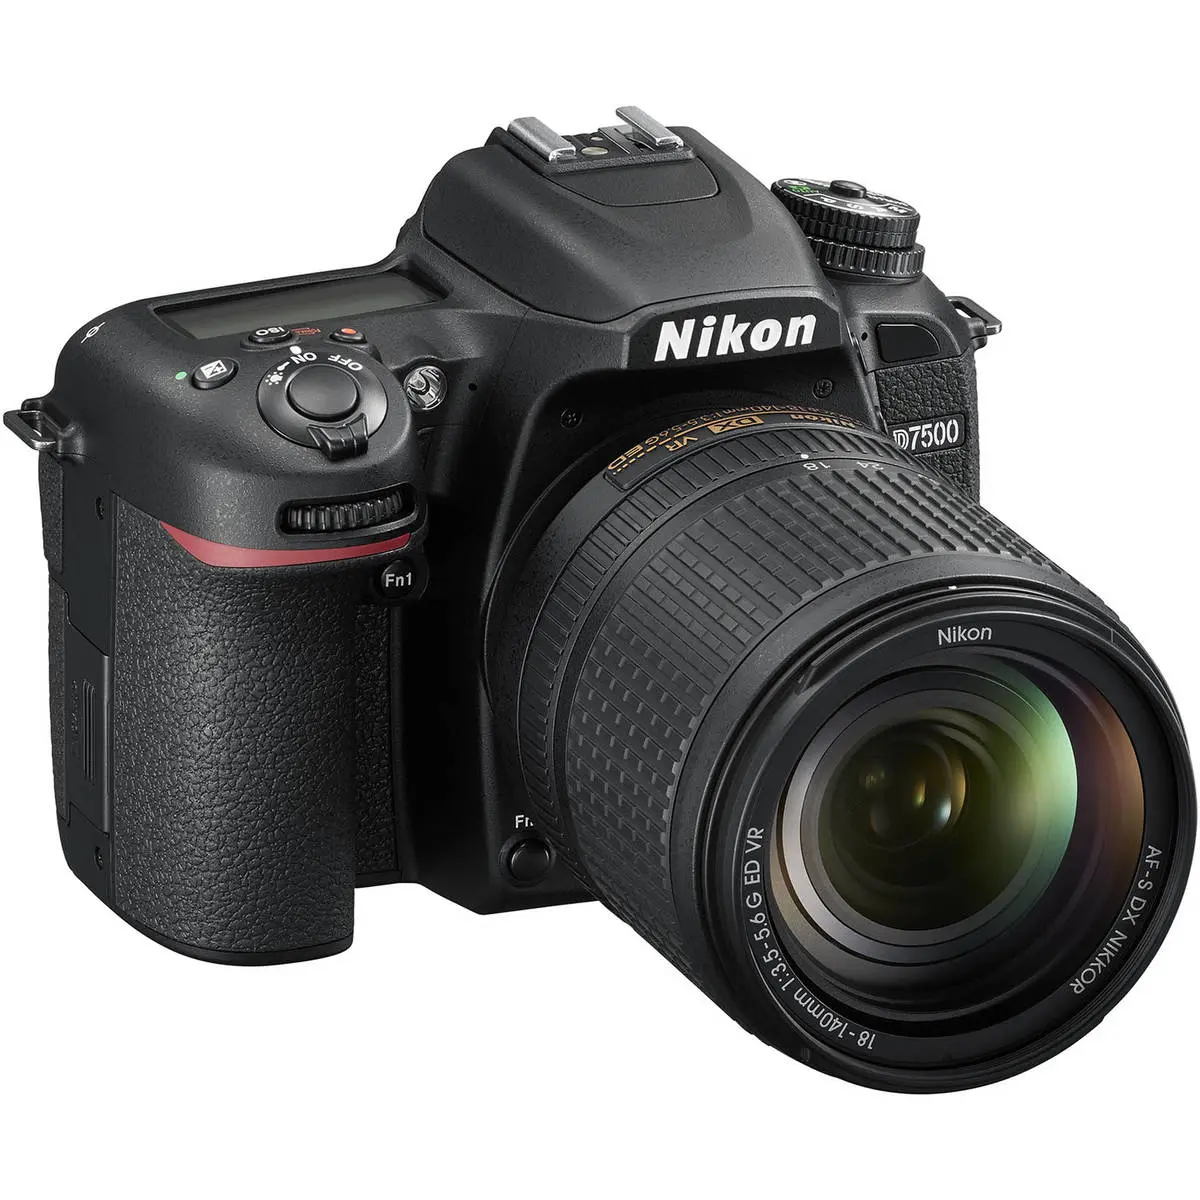 3. Nikon D7500 18-140 kit 20.9MP 4K UltraHD Digital SLR Camera